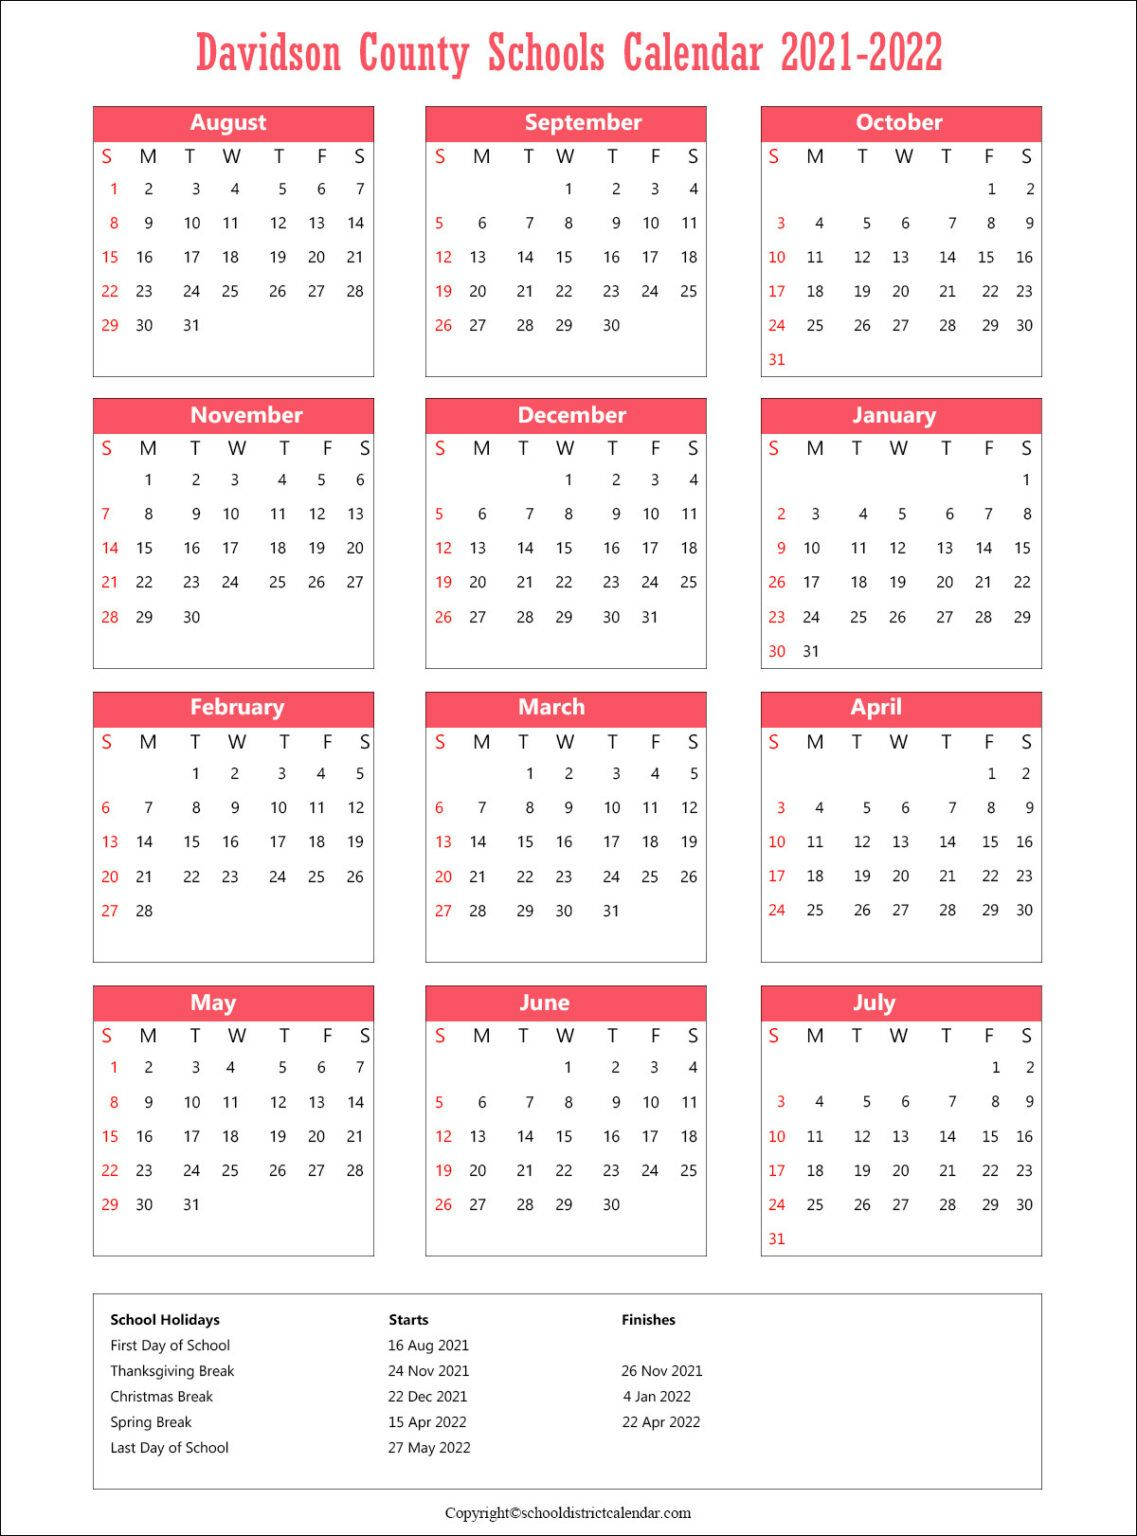 Davidson County Schools District Calendar Holidays 2021-2022